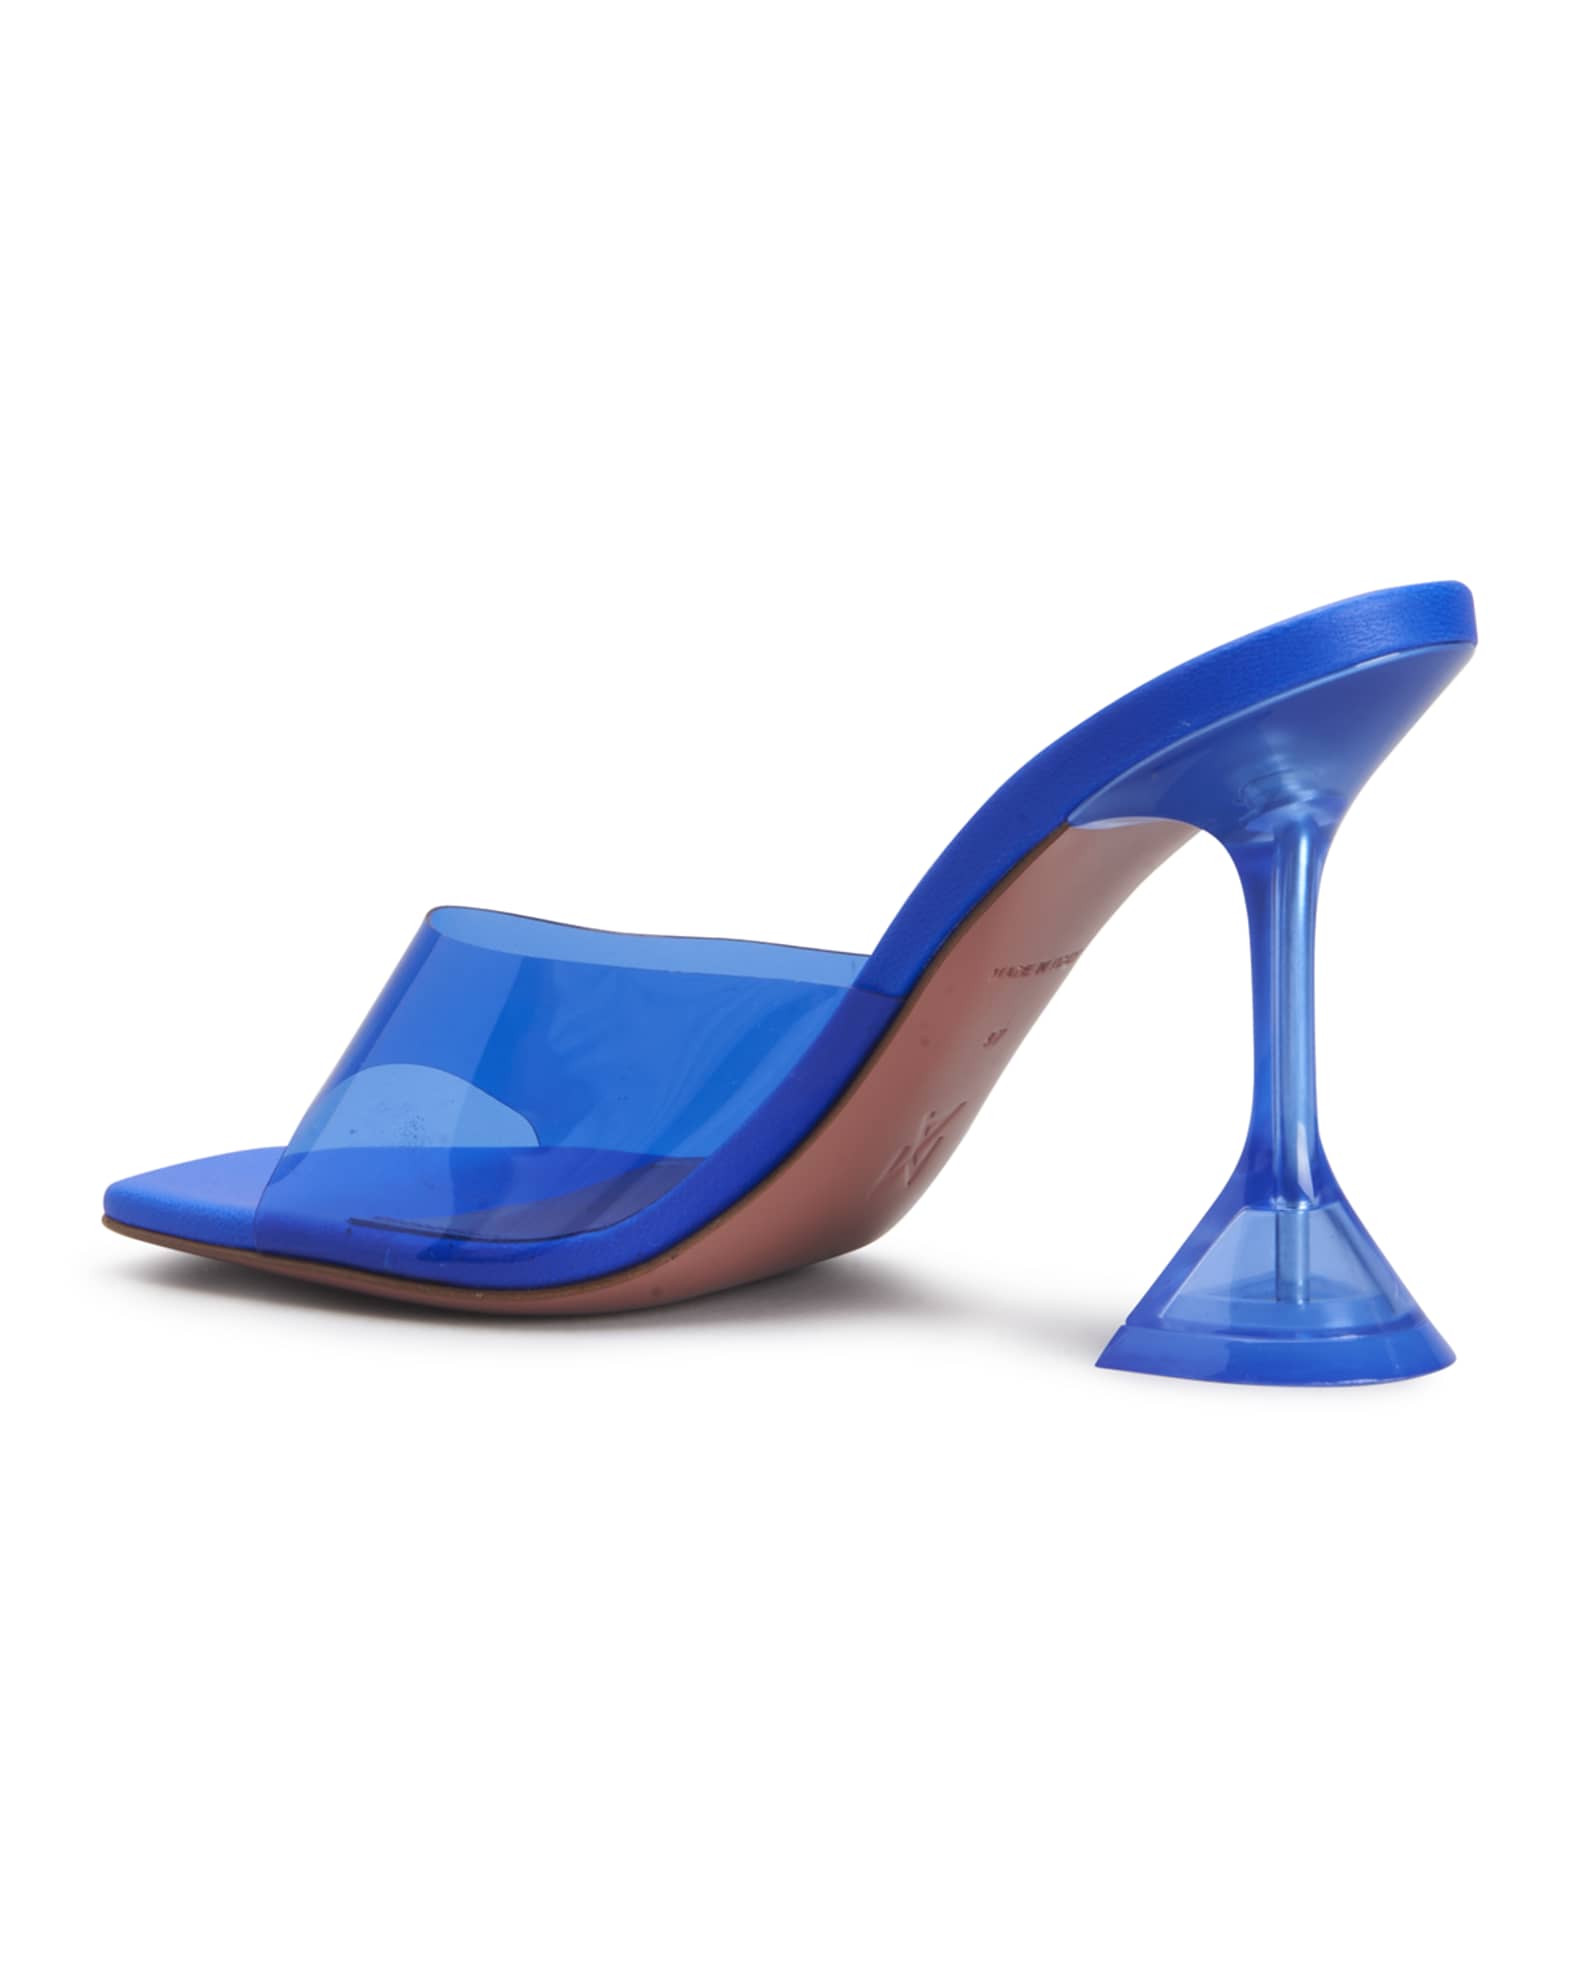 Amina Muaddi Lupita Glass Slide Sandals | Neiman Marcus